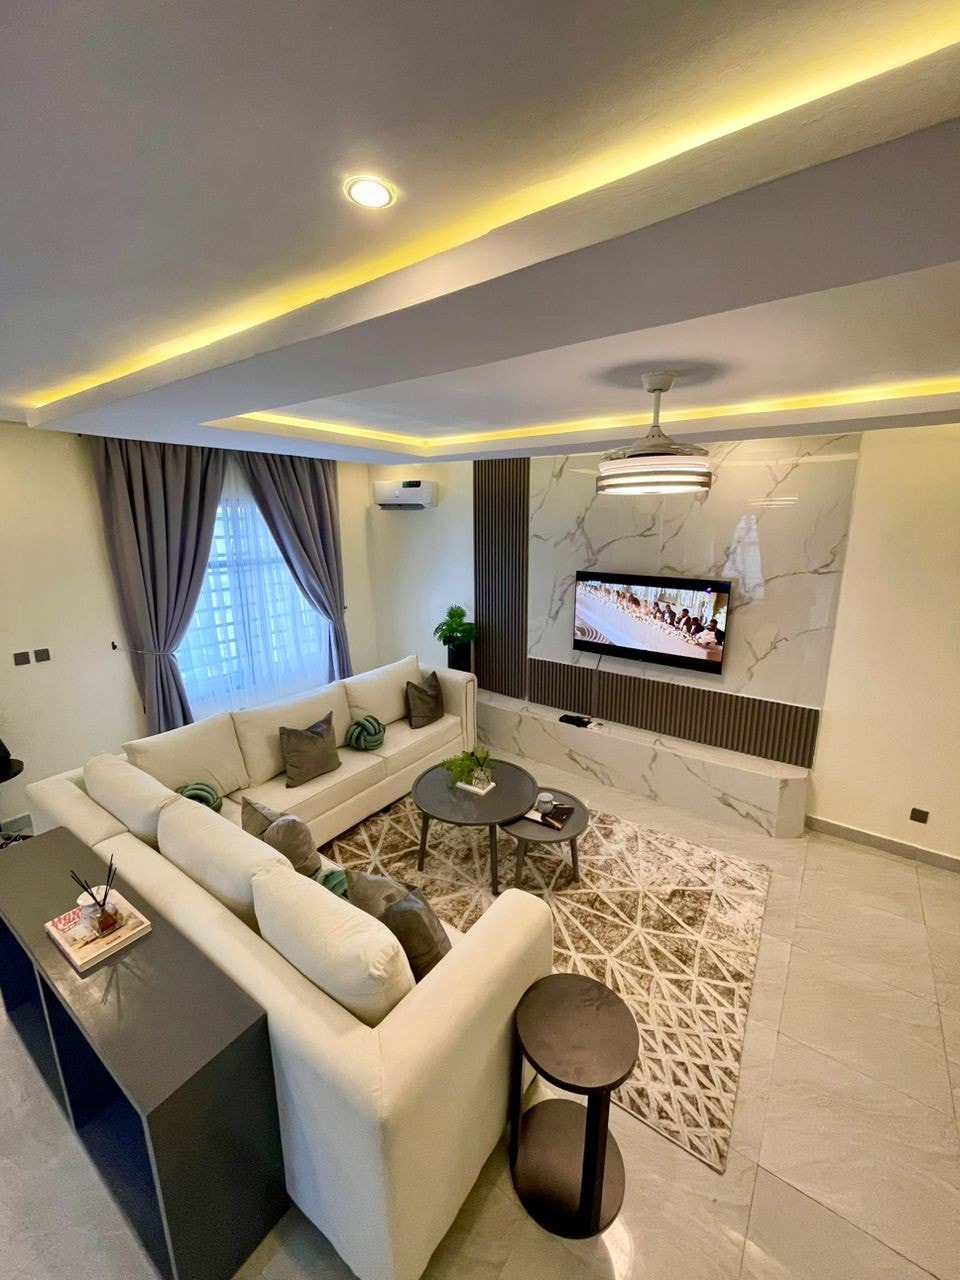 Luxury 2-Bedroom Duplex in Abraham Adesanya Layout